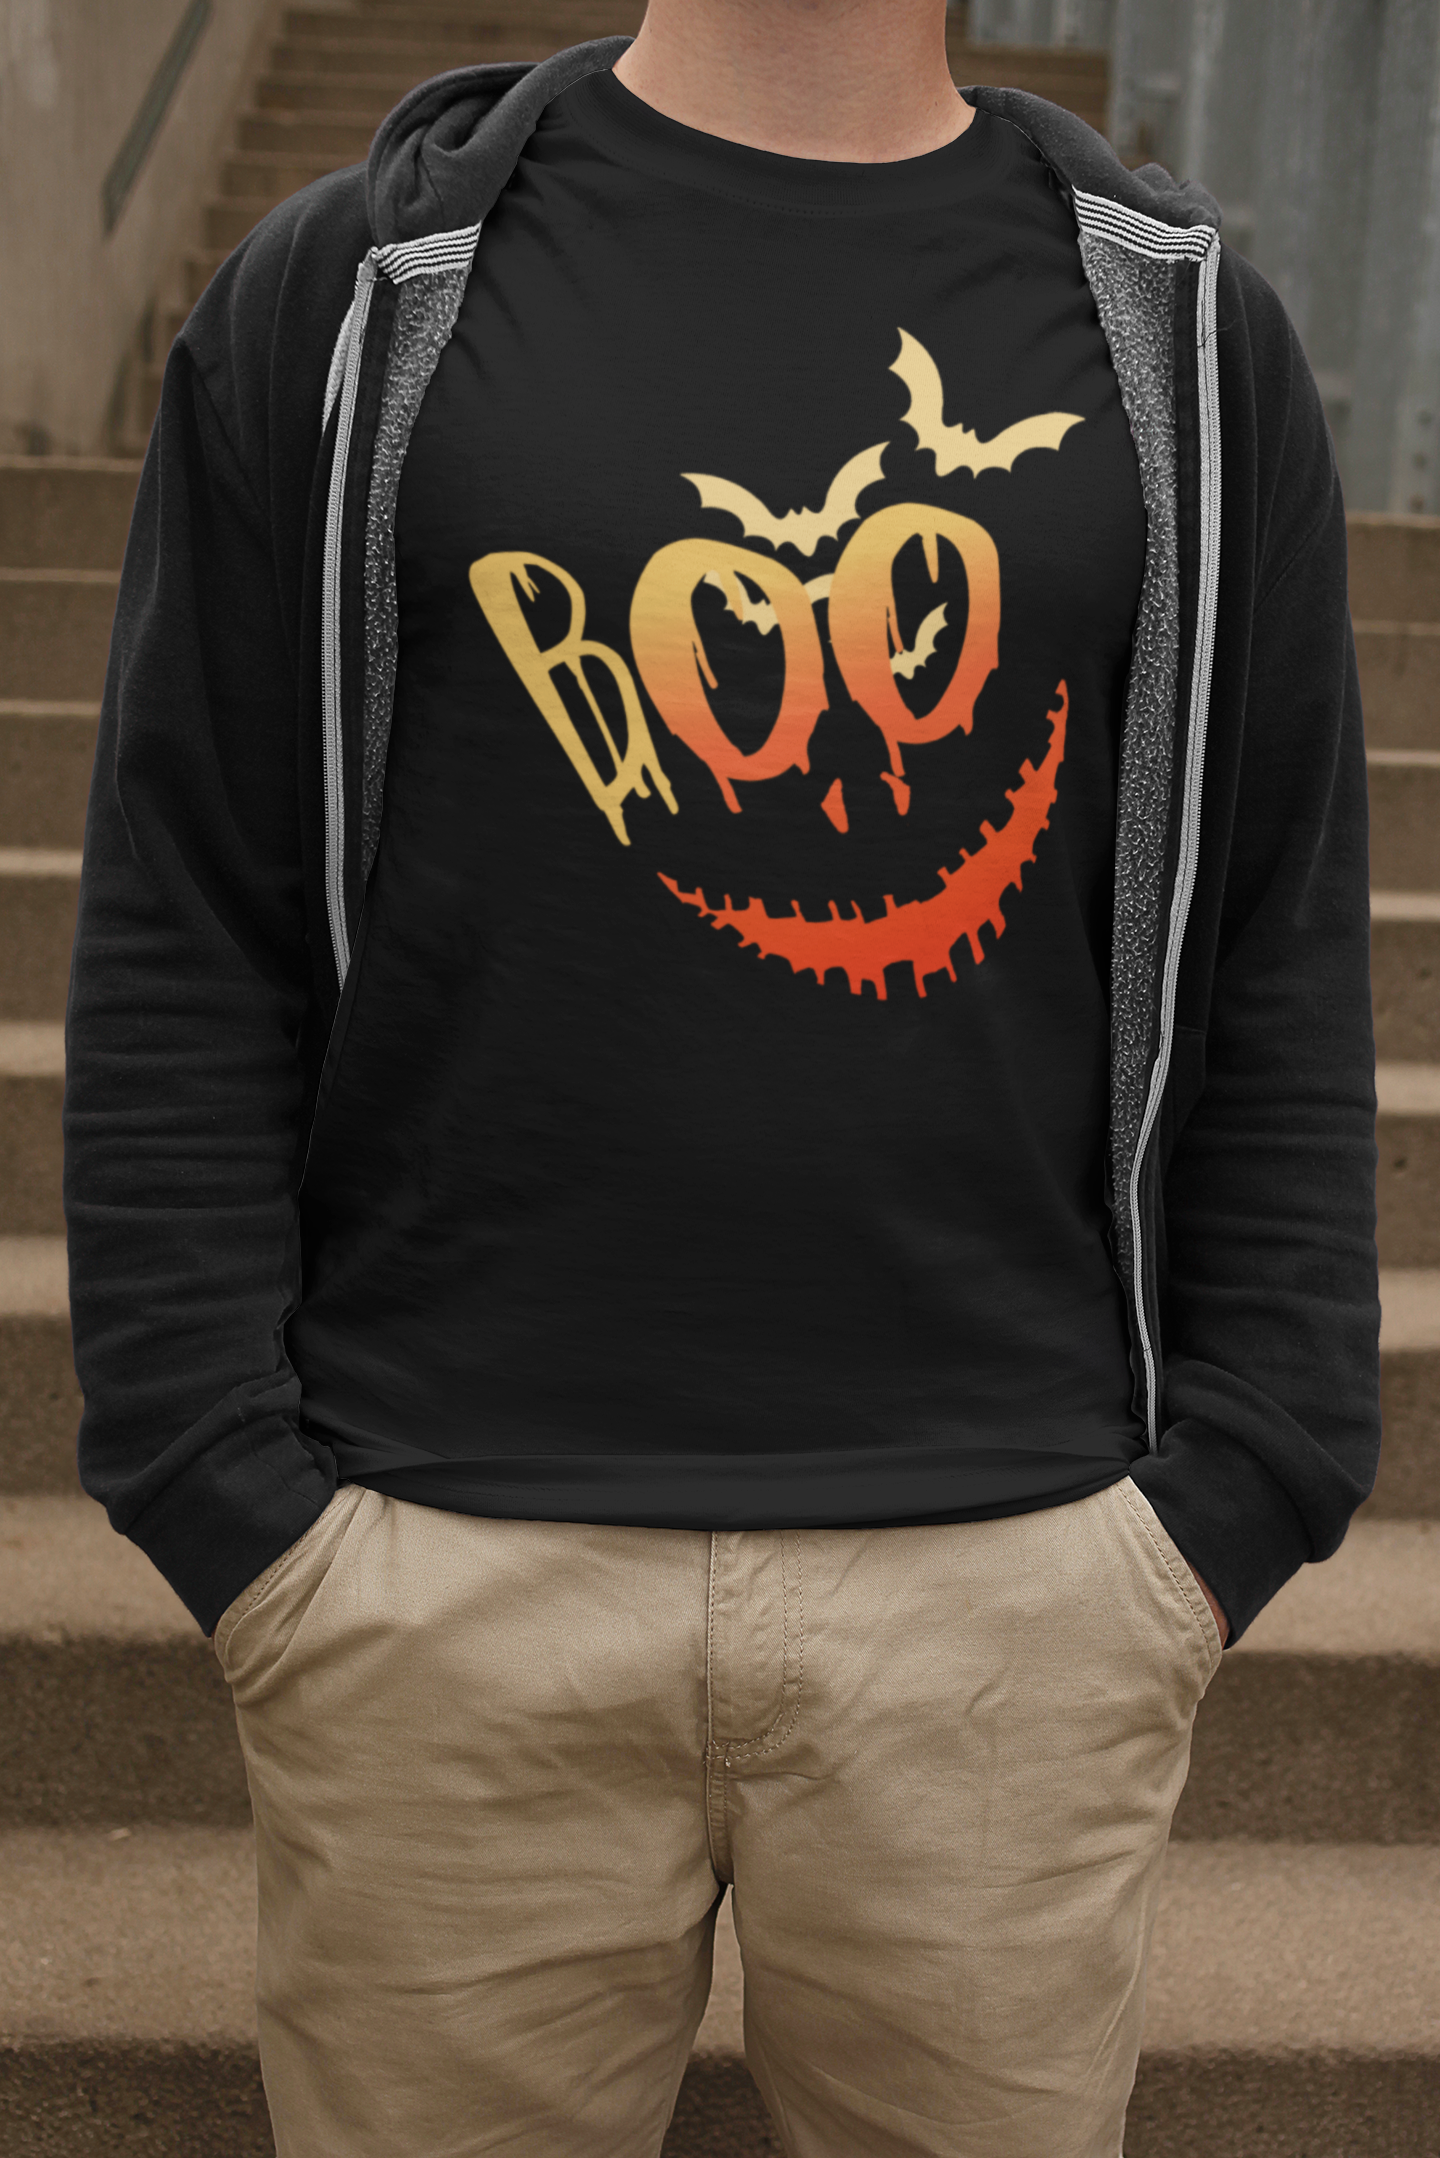 BOO Ghoul TShirt - Unisex - Halloween